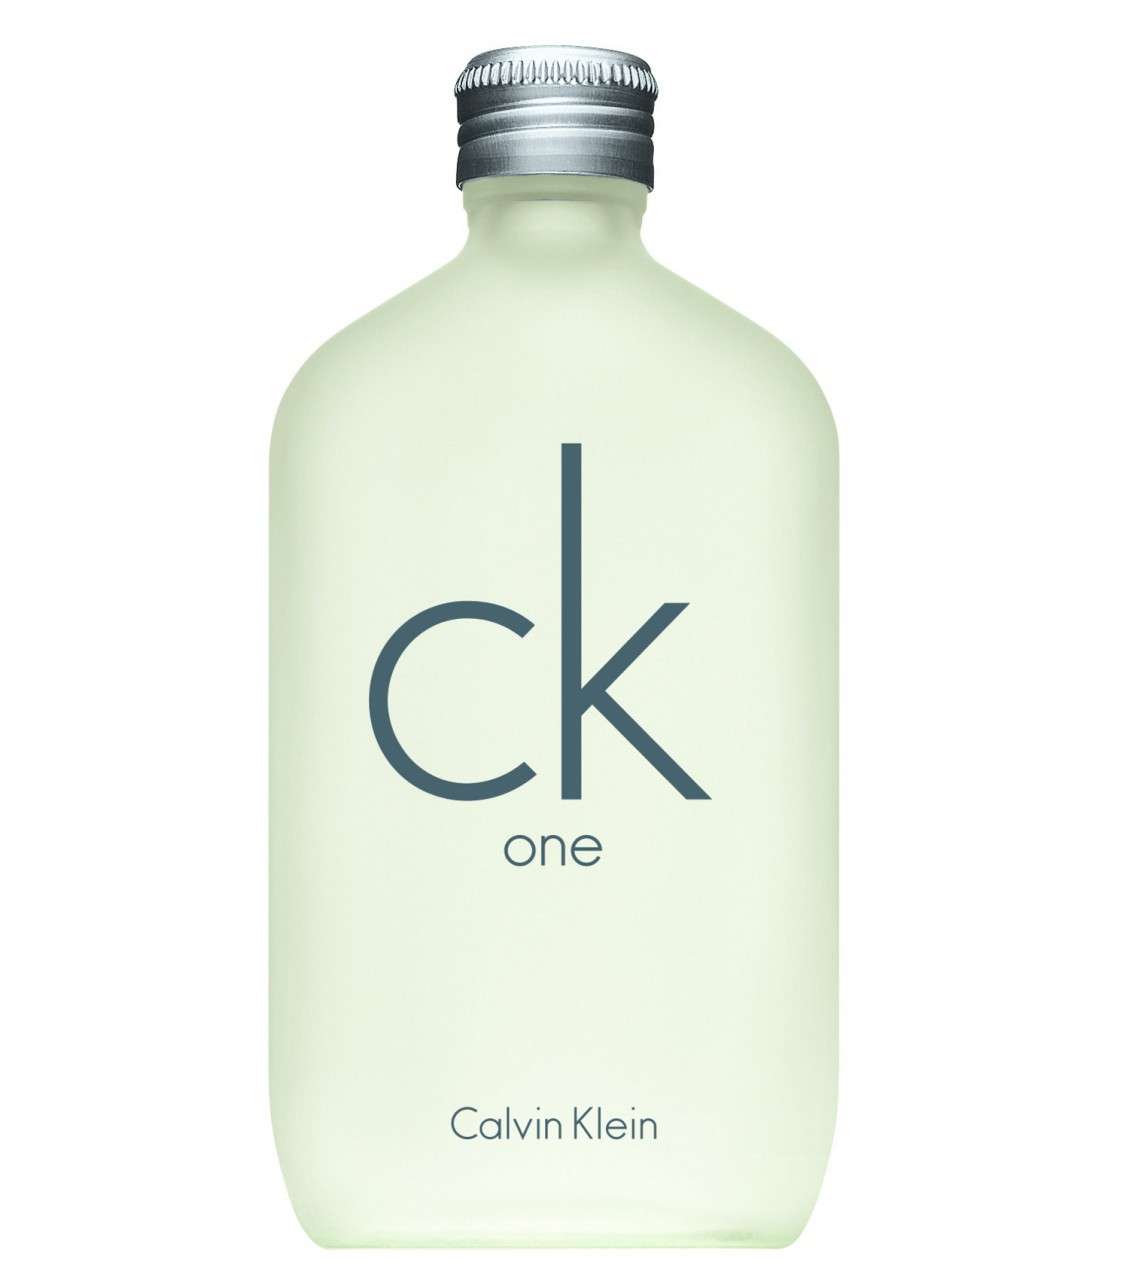 Calvin Klein - CK One Eau de Toilette - 200 ml (GROSS)